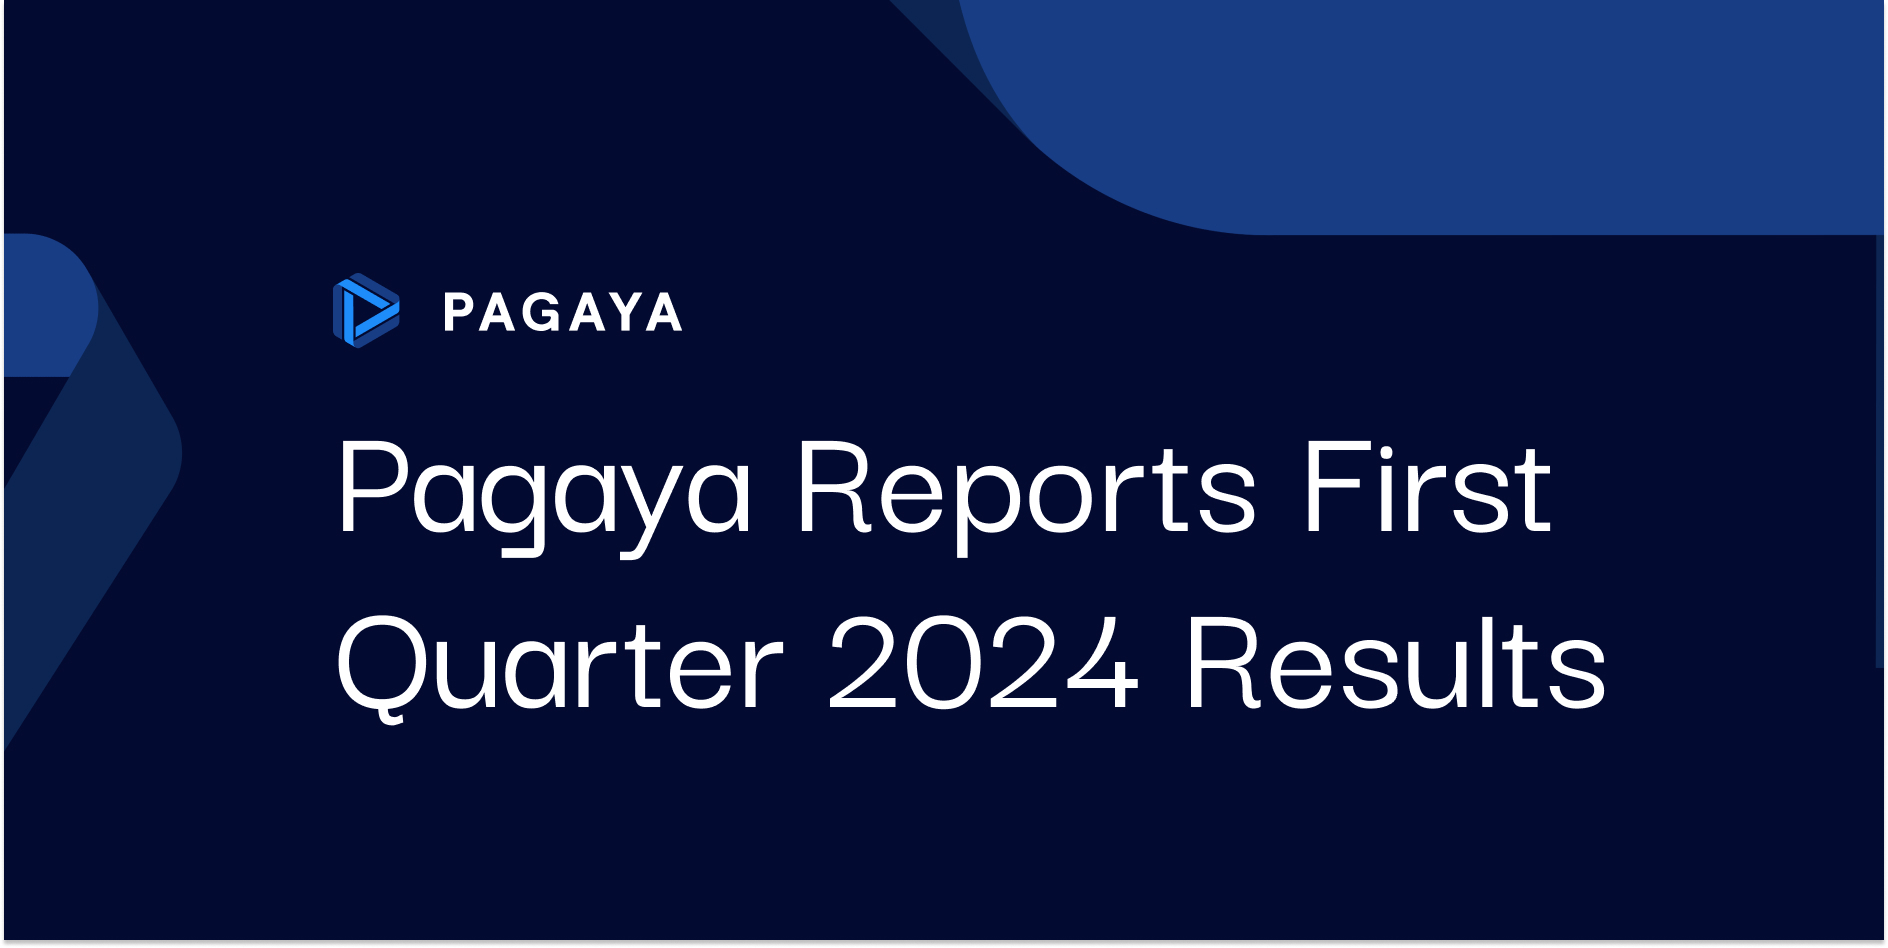 Pagaya Reports First Quarter 2024 Results